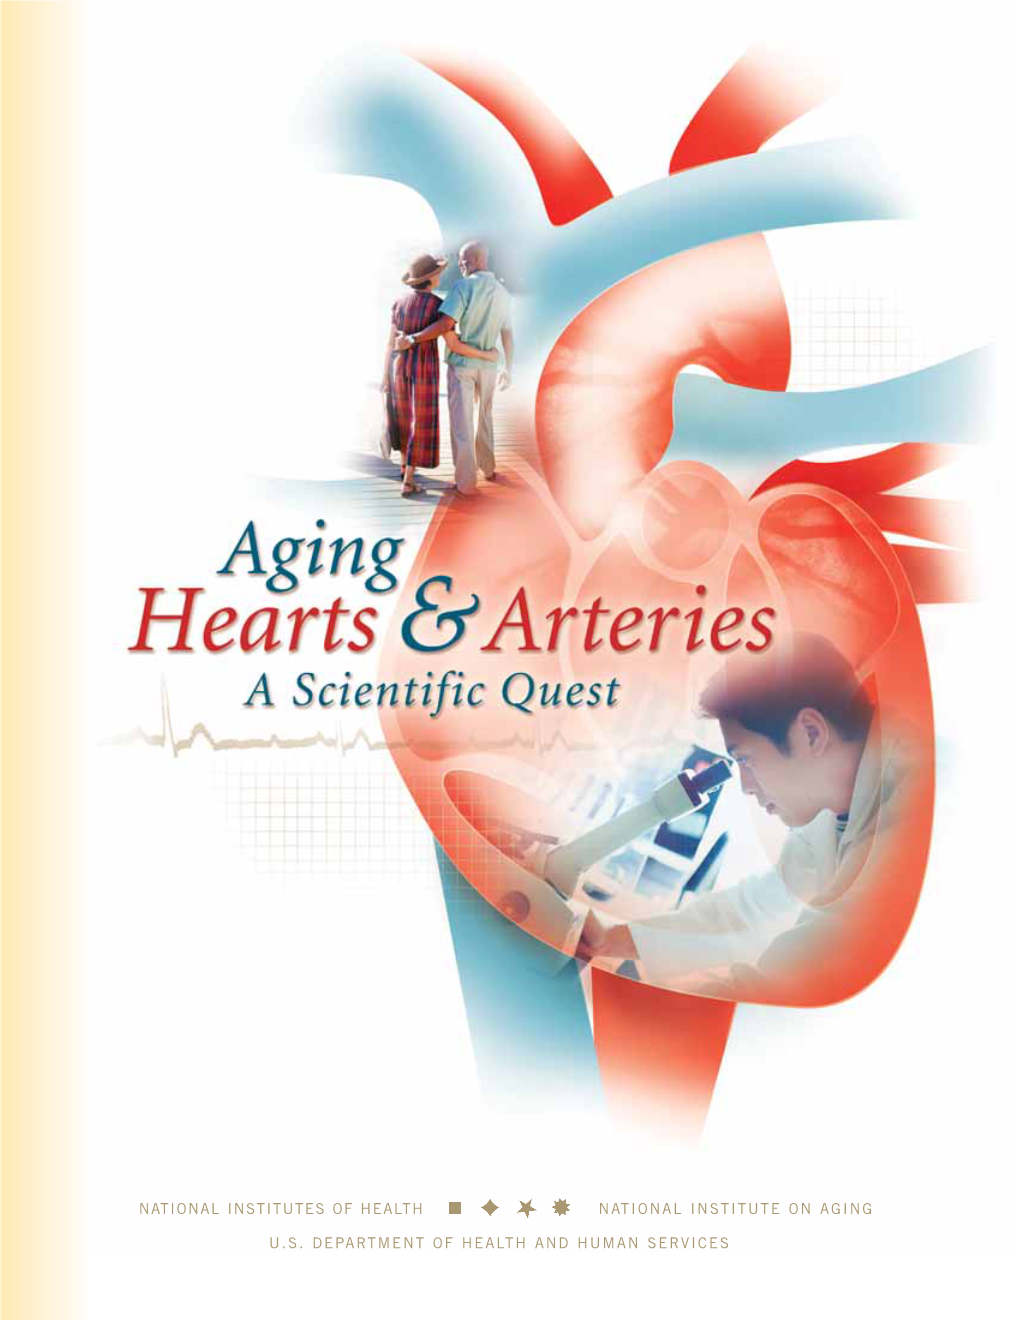 Aging Hearts & Arteries